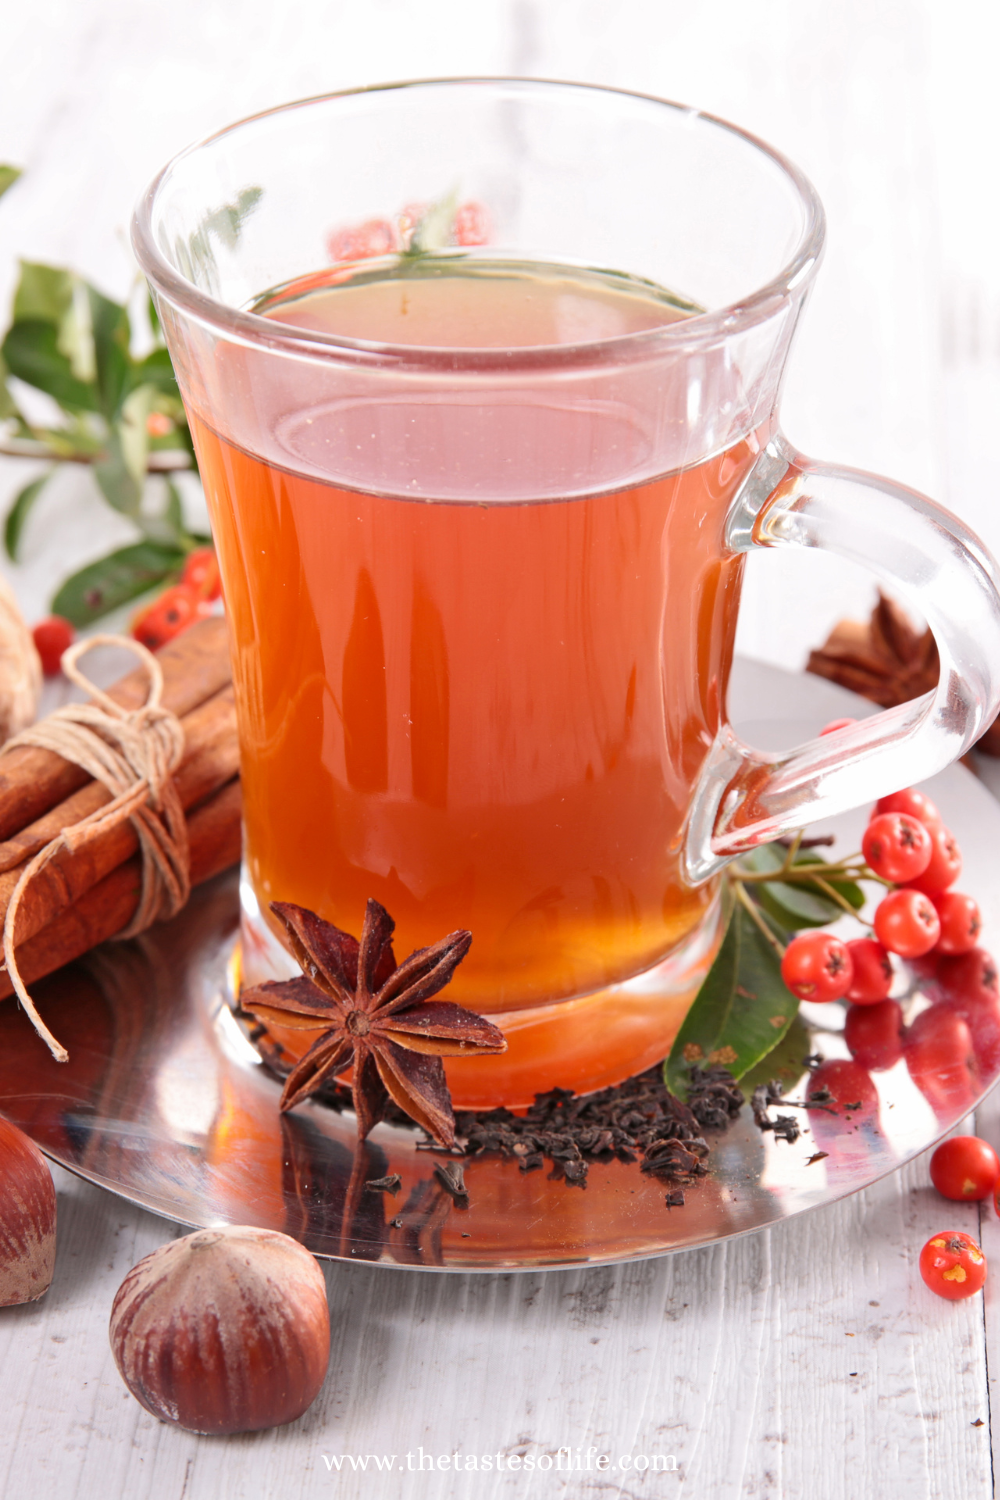 How To Make Immunity Boosting Herbal Winter Tea Recipe